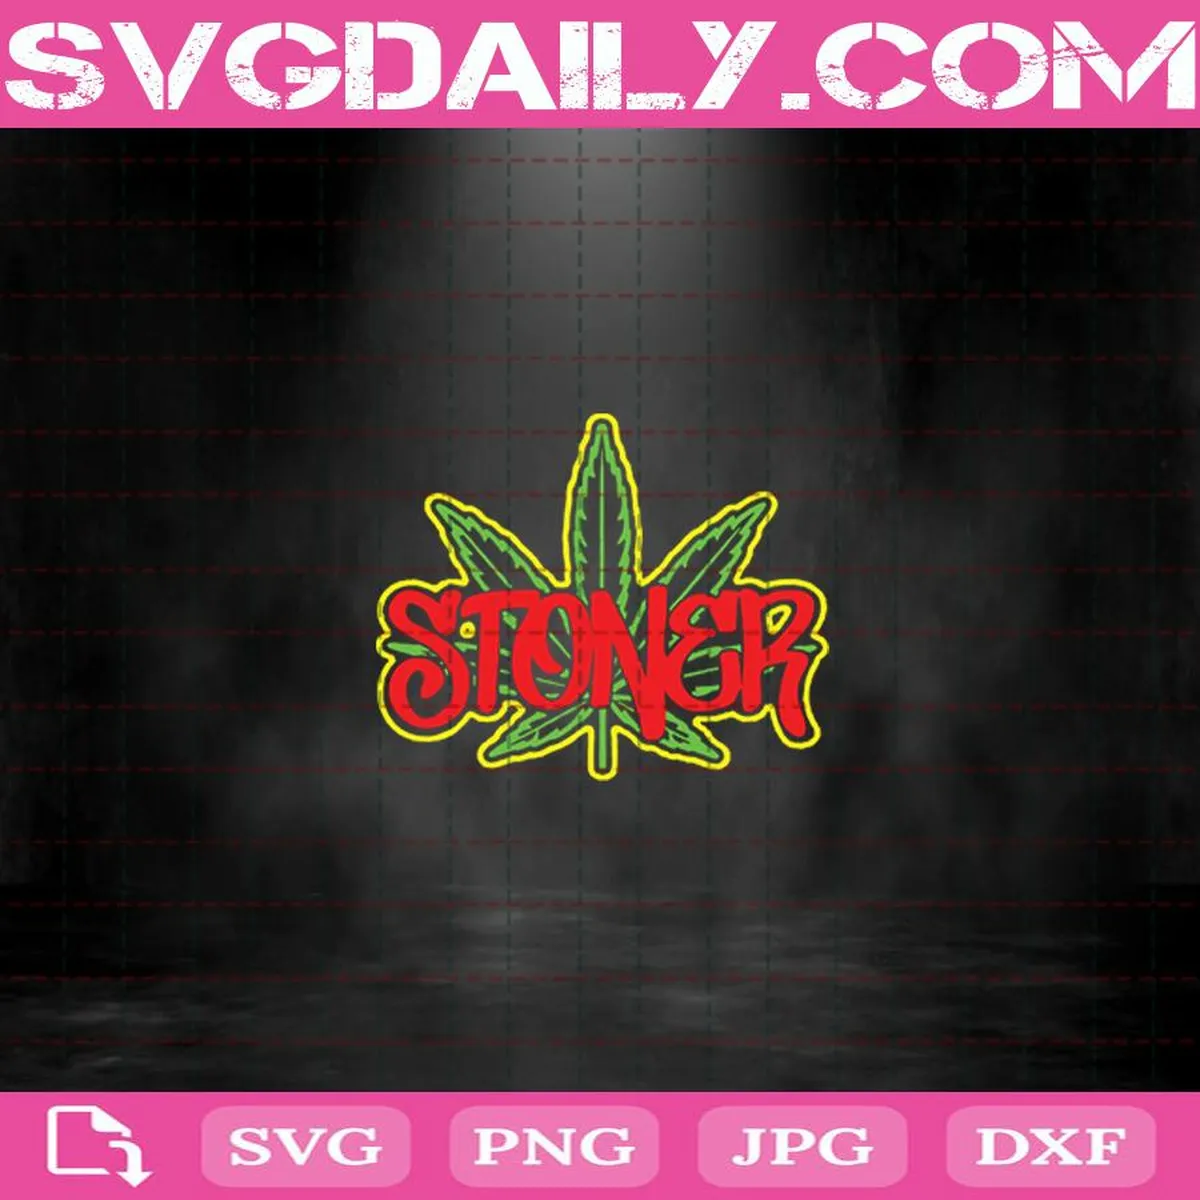 Stoner Graffiti Leaf Svg, Stoner Svg, Graffiti Leaf Svg, Cannabis Svg, Weed Svg, Weed Stoner Svg